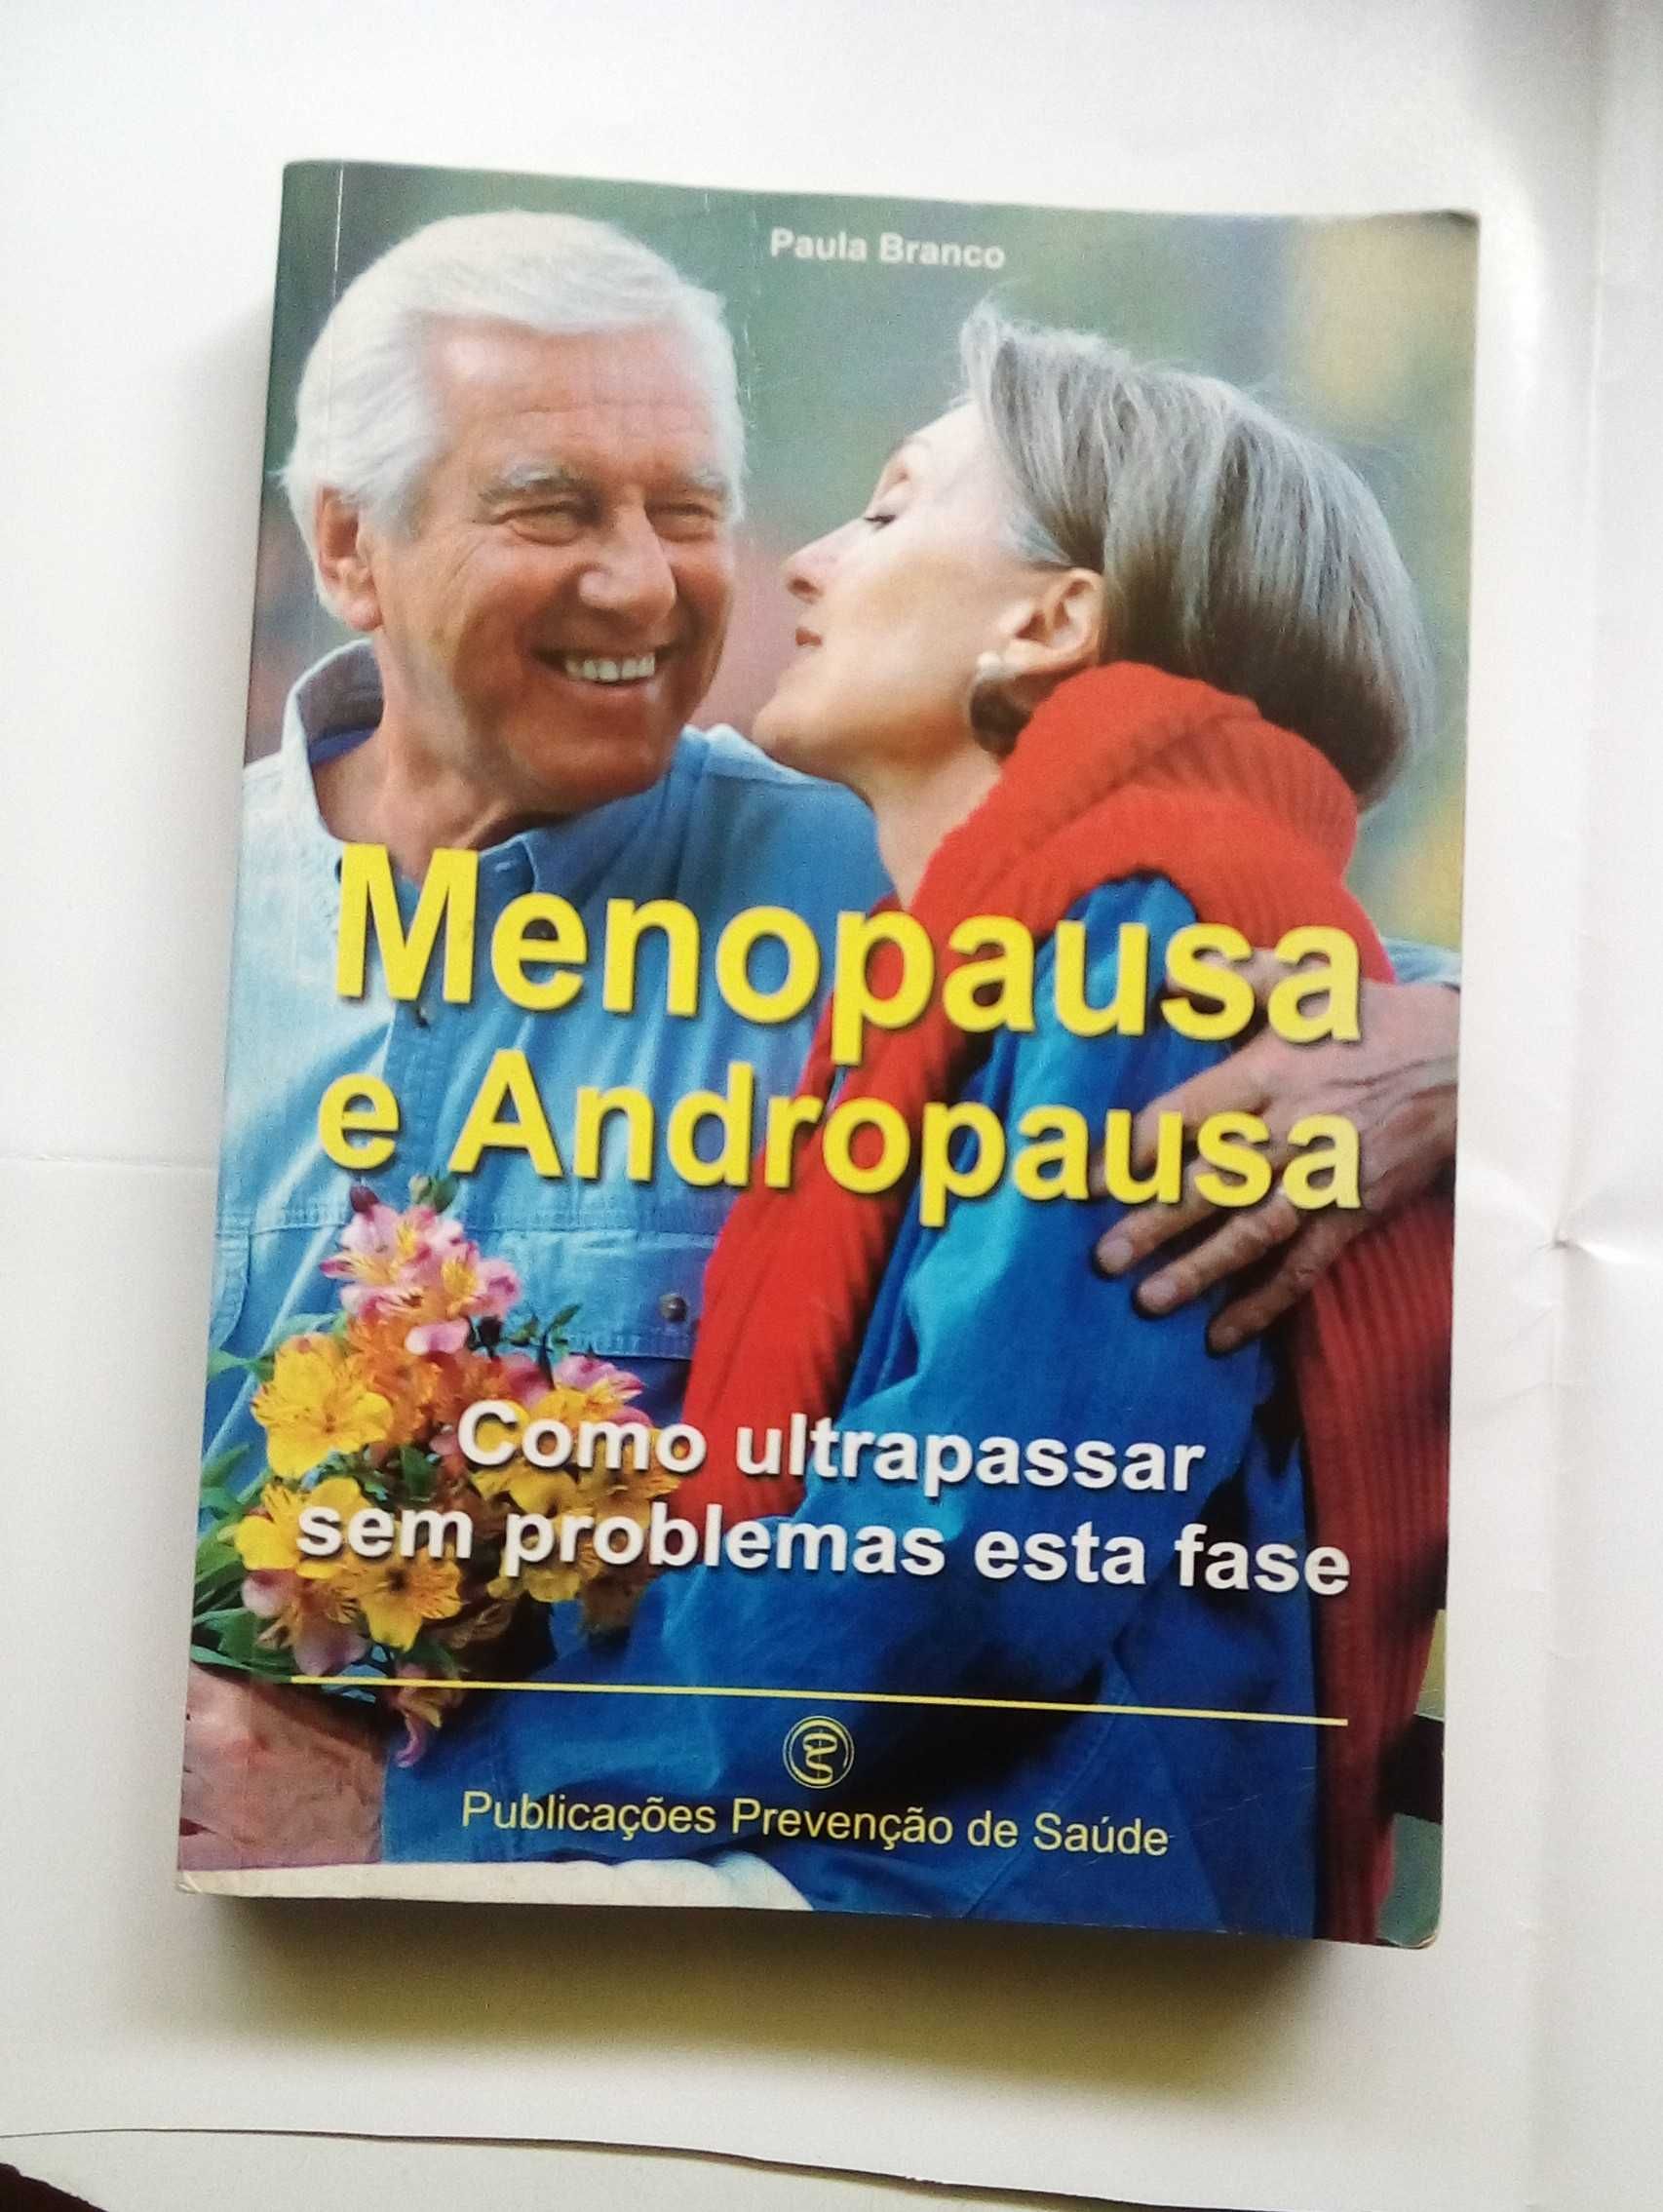 Menopausa e andropausa, de Paula Branco